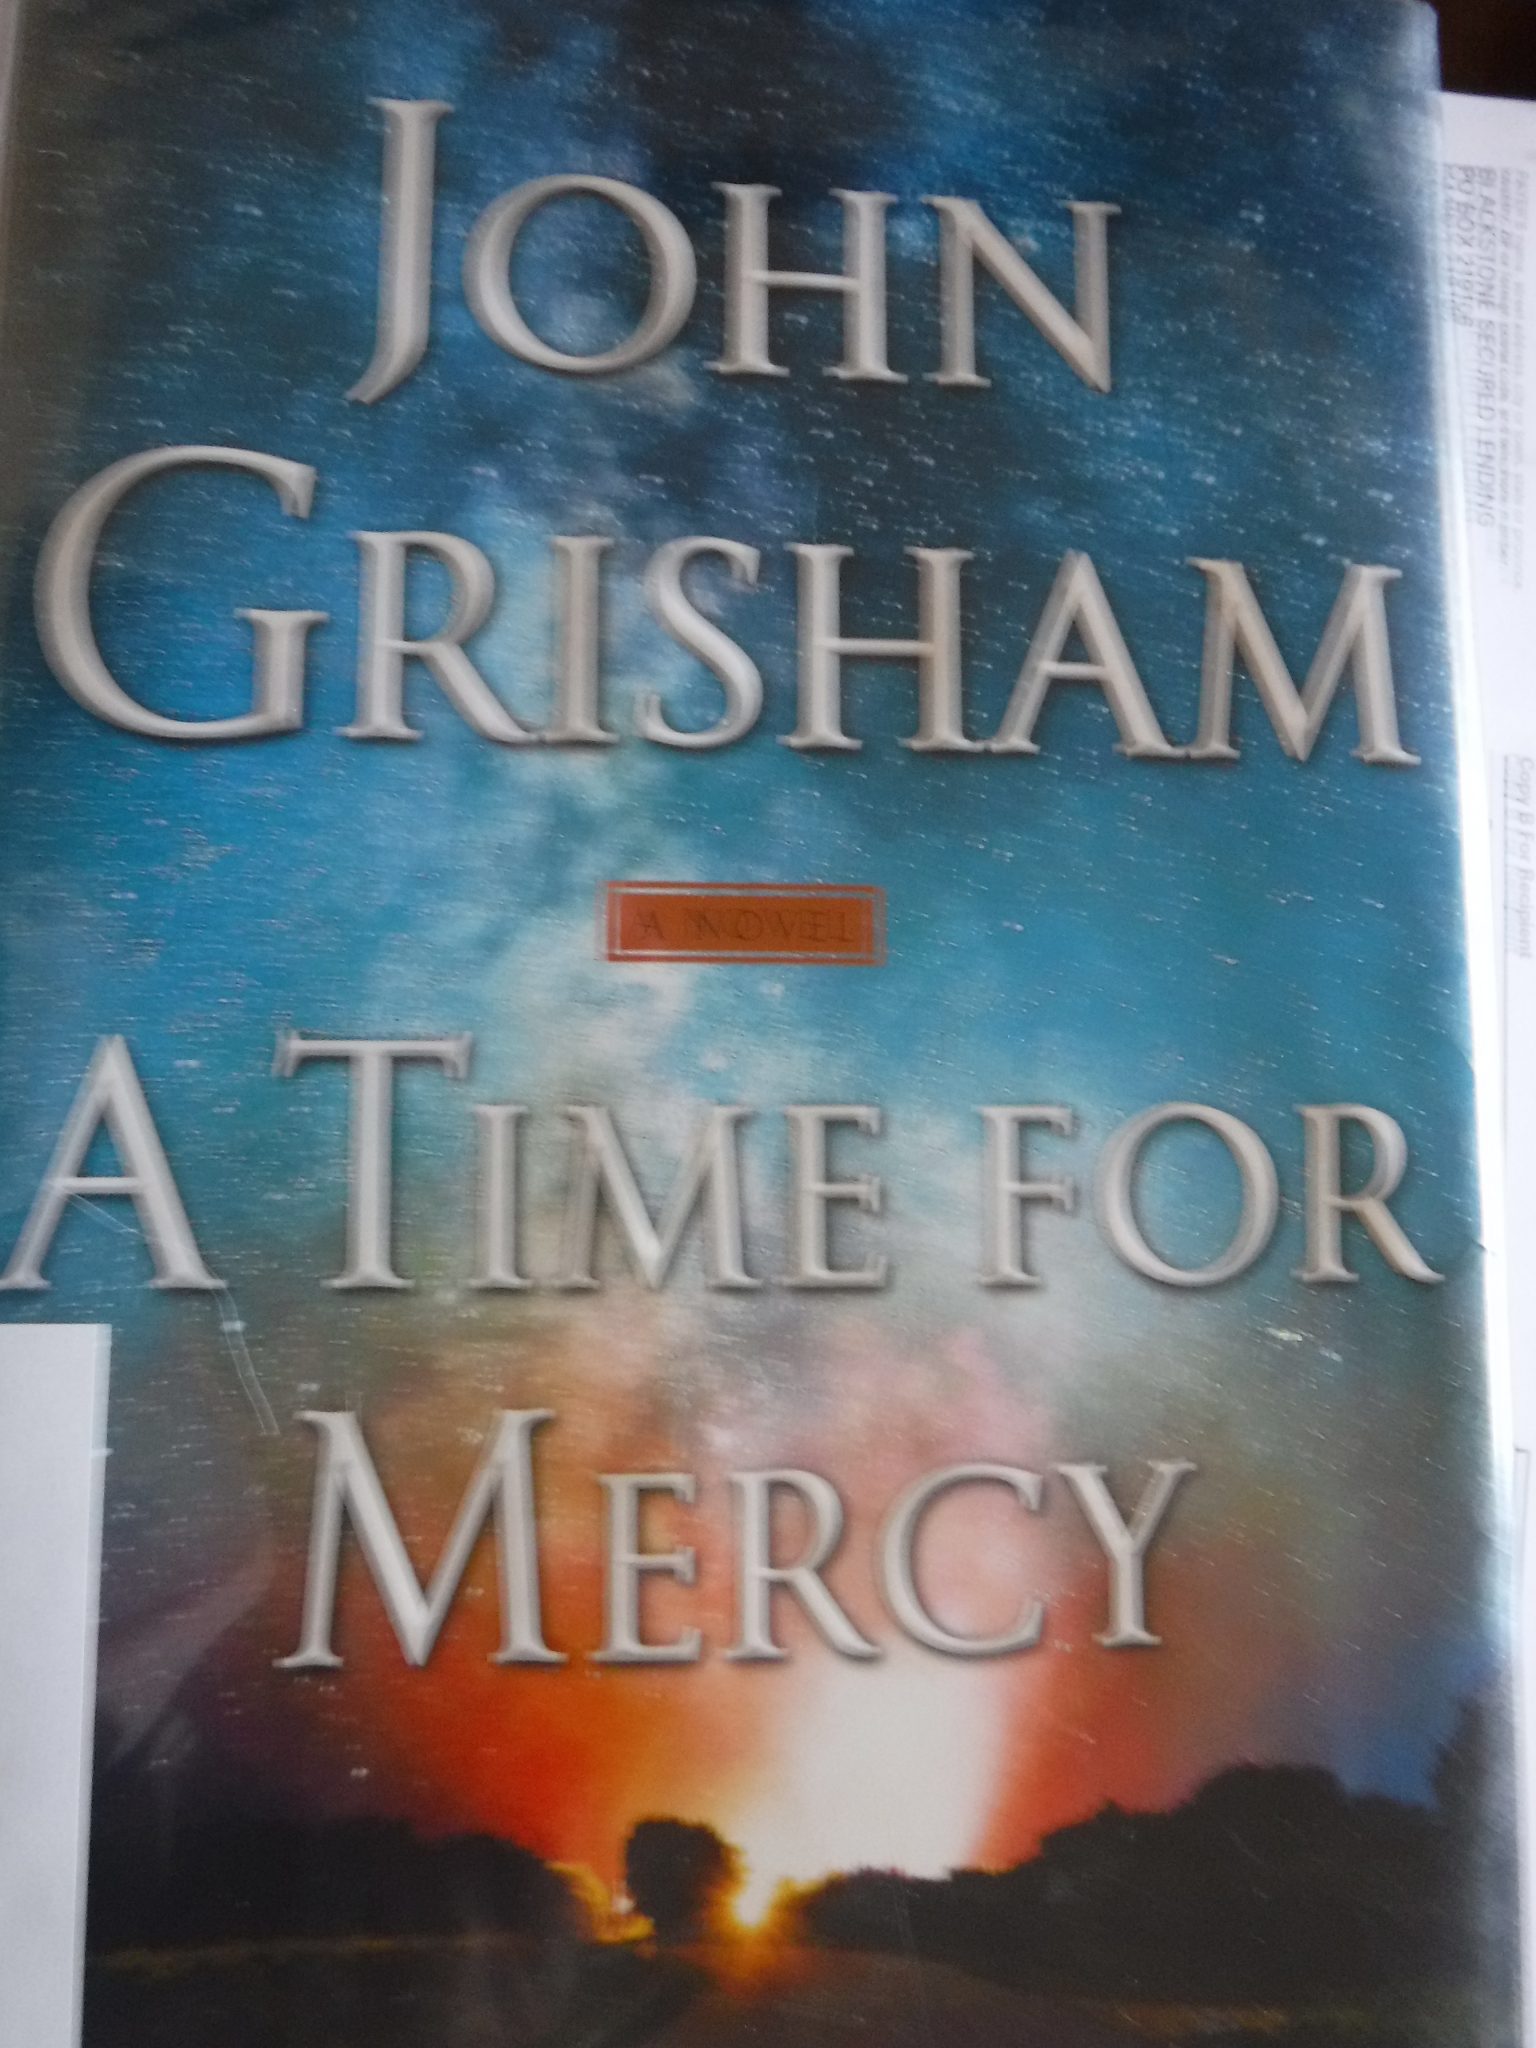 a time for mercy john grisham summary